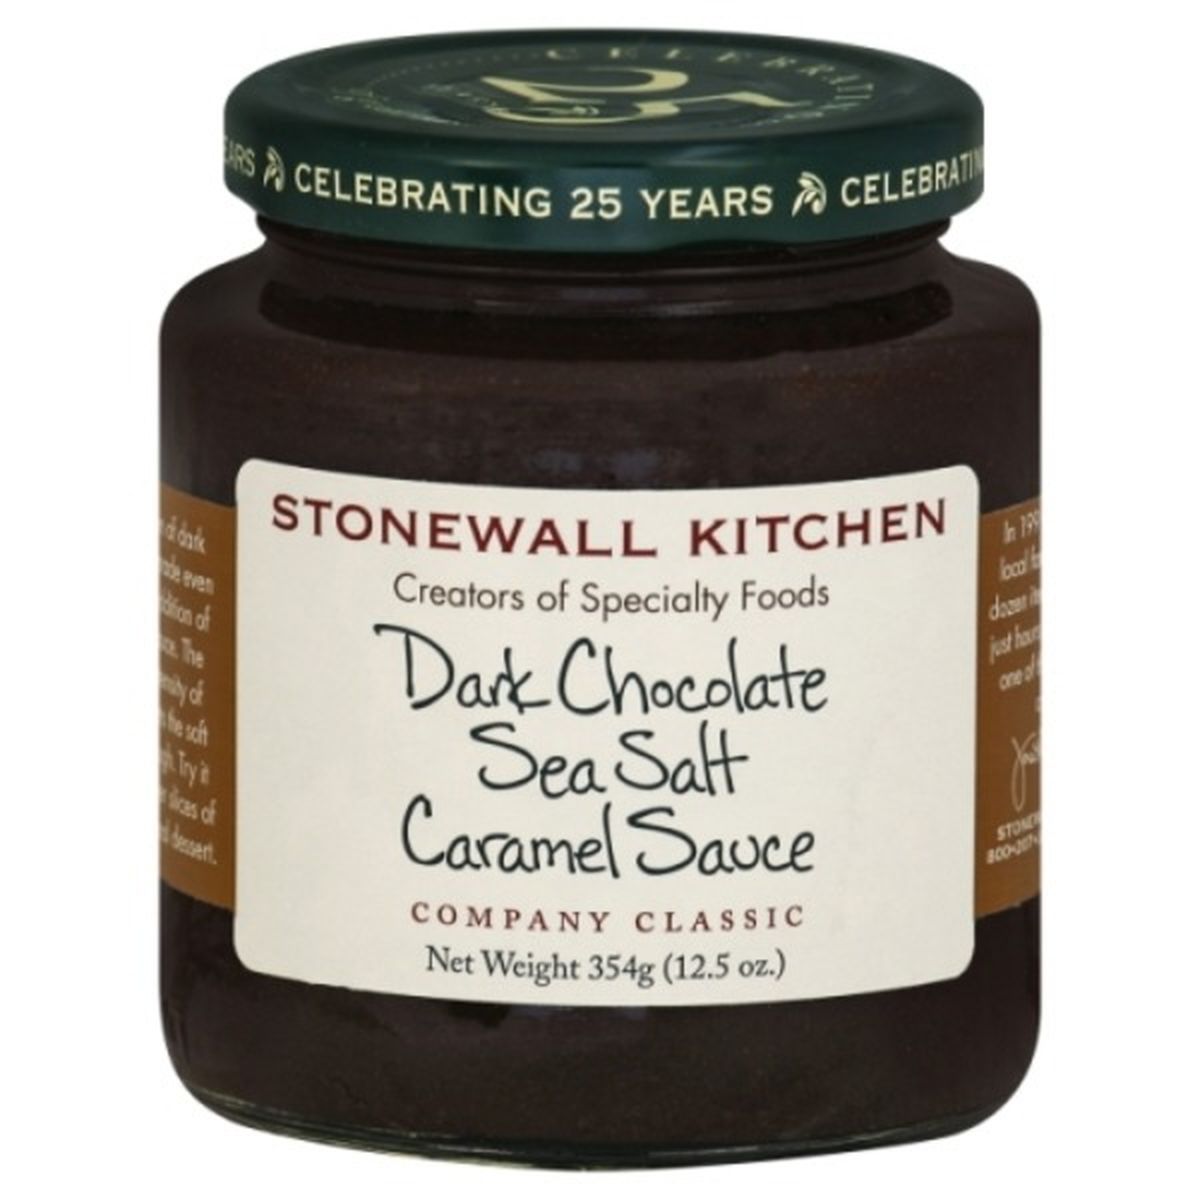 Calories in Stonewall Kitchen Caramel Sauce, Dark Chocolate Sea Salt